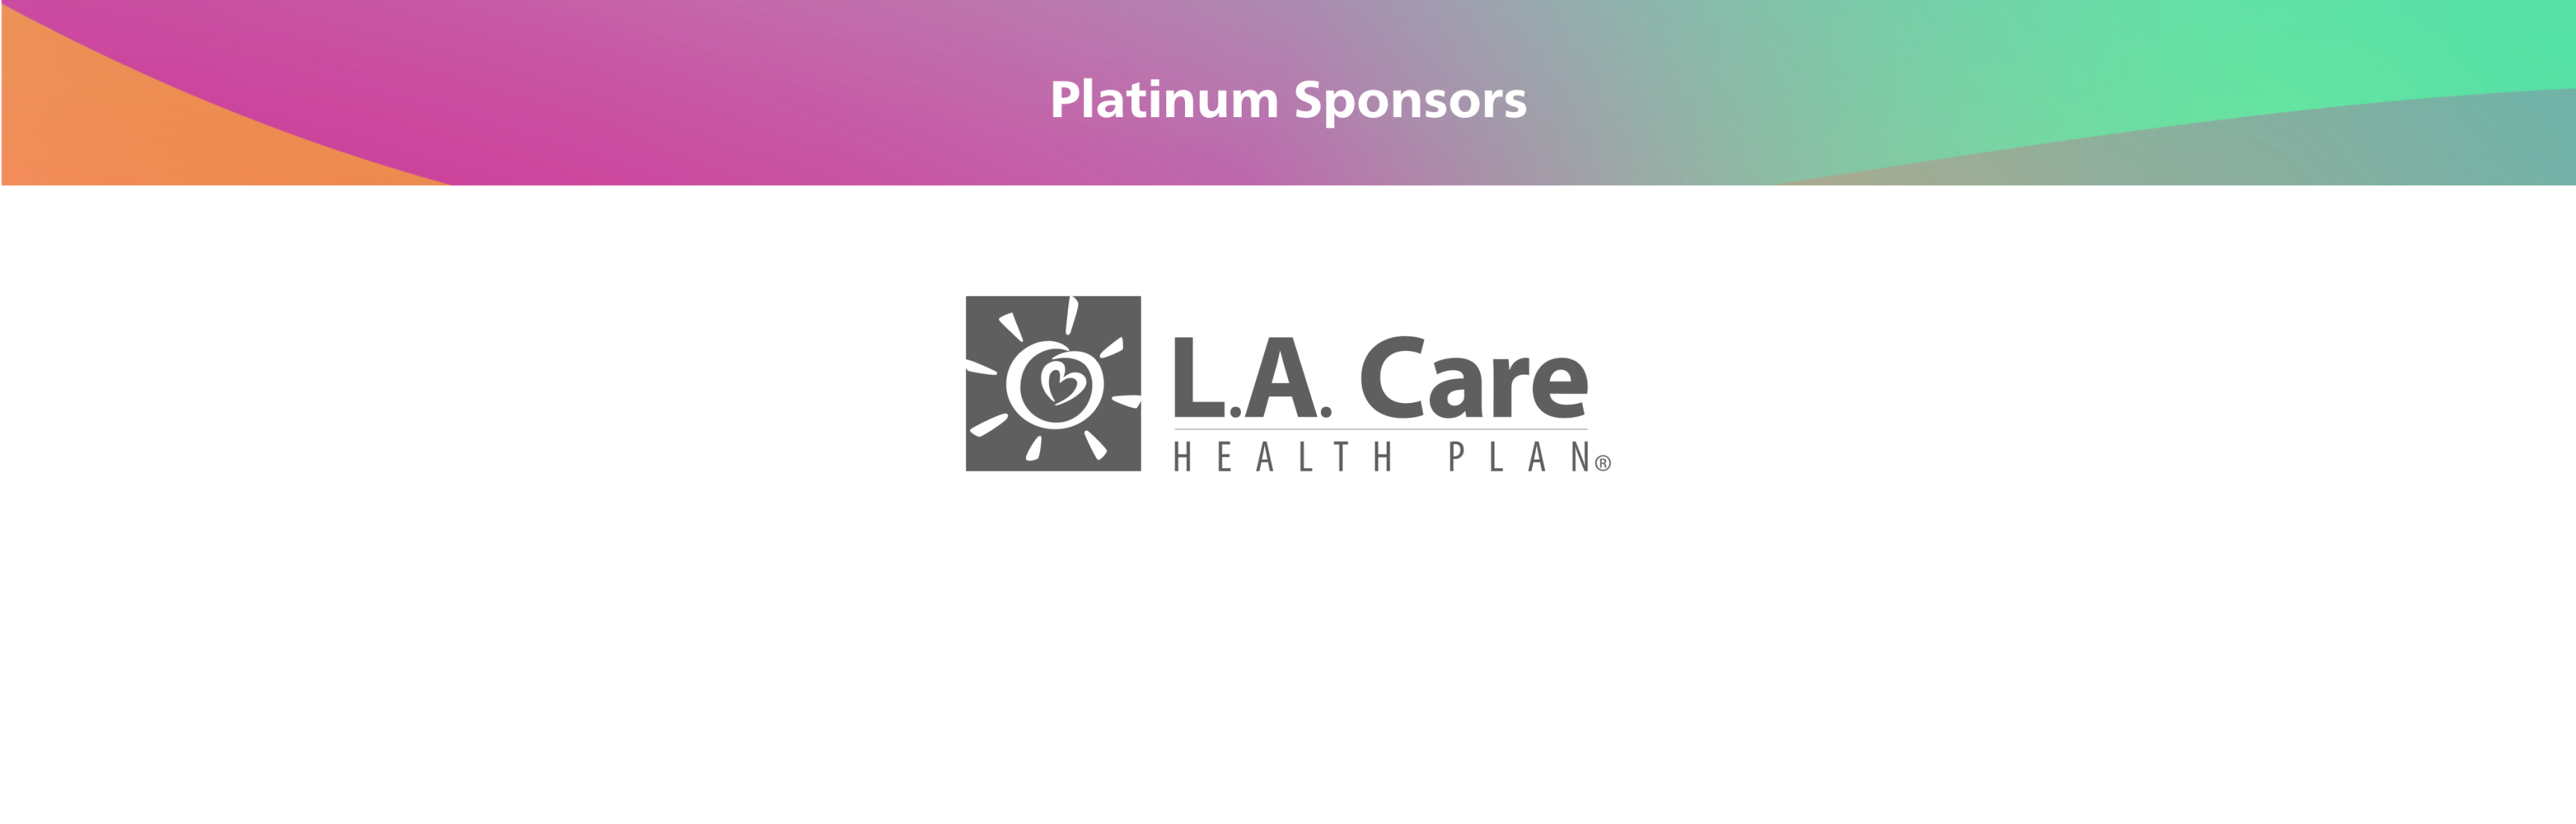 Dream Show platinum sponsor LA Care